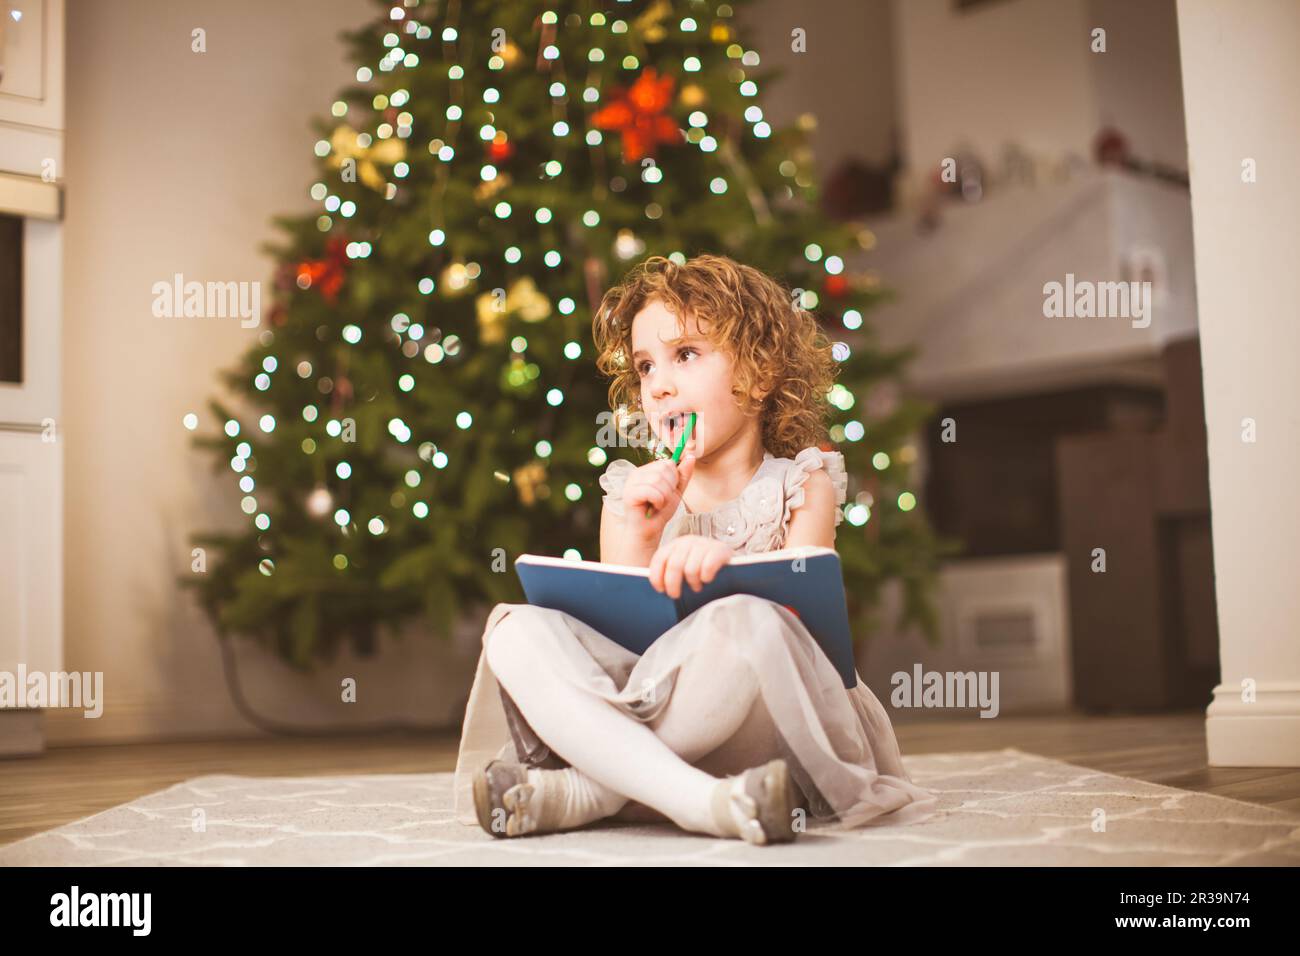 Dreamy girl sitting near decorated Christmas tree Stock Photo